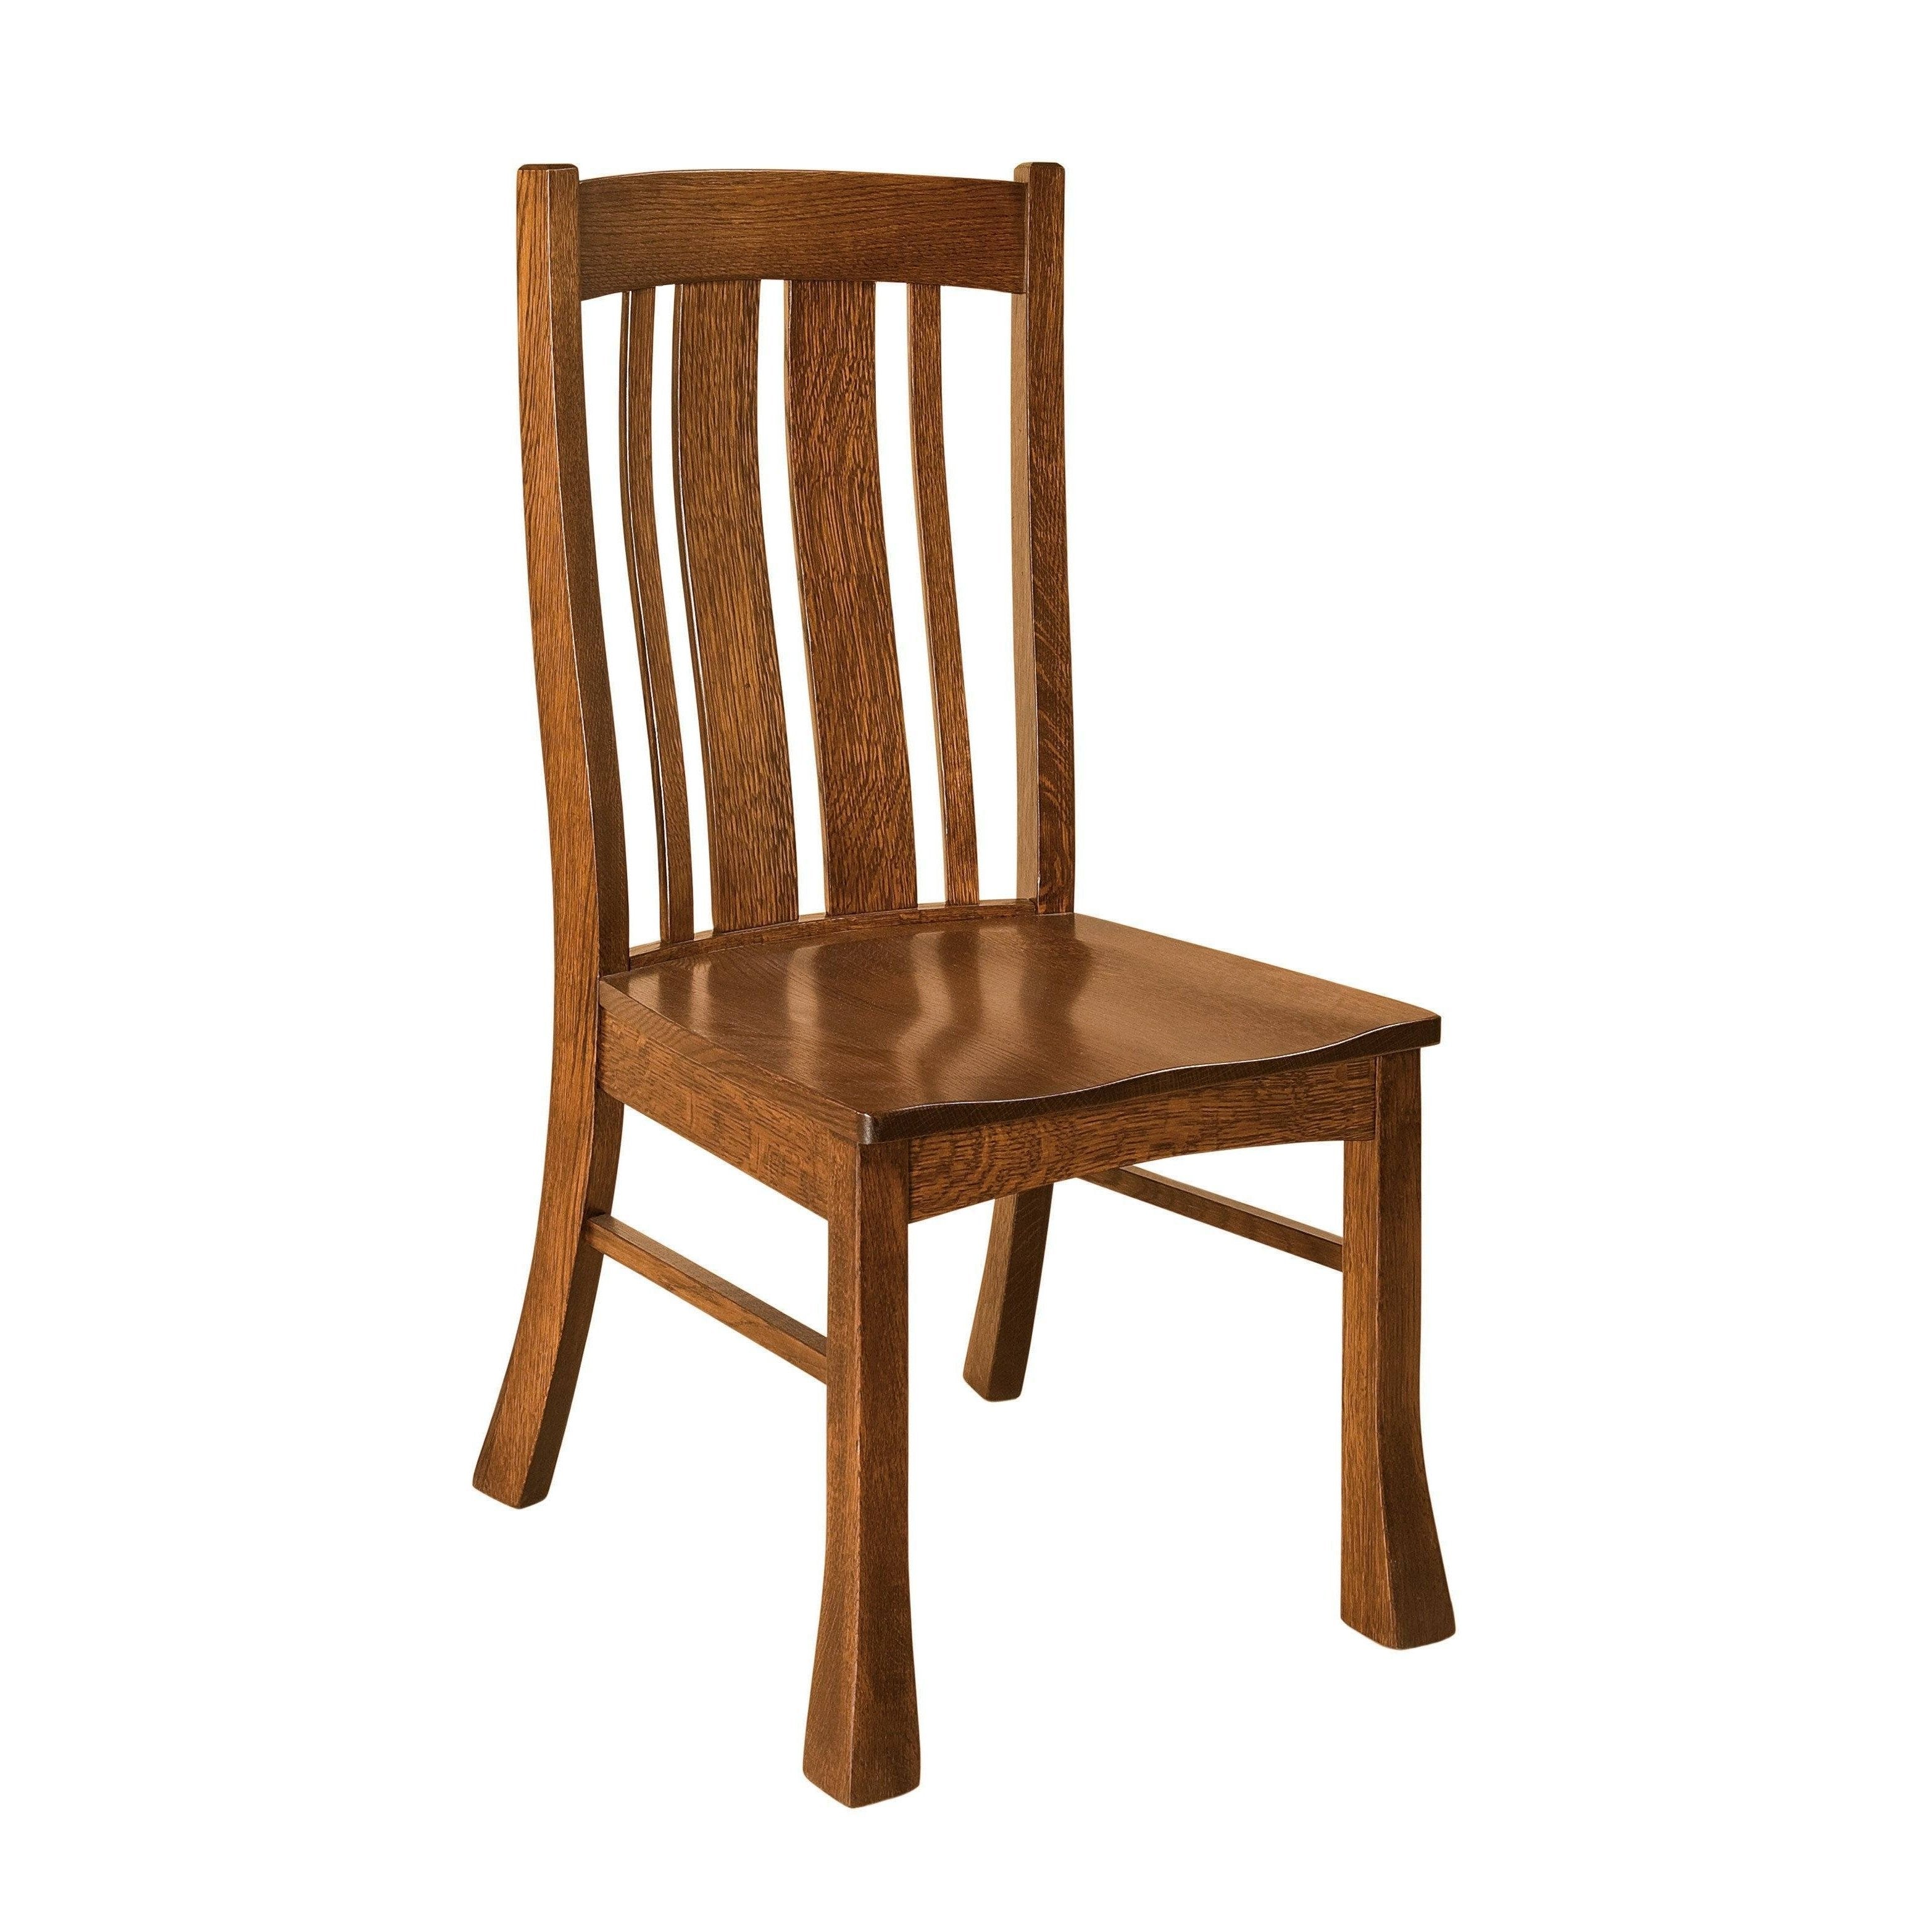 breckenridge-side-chair-260061.jpg